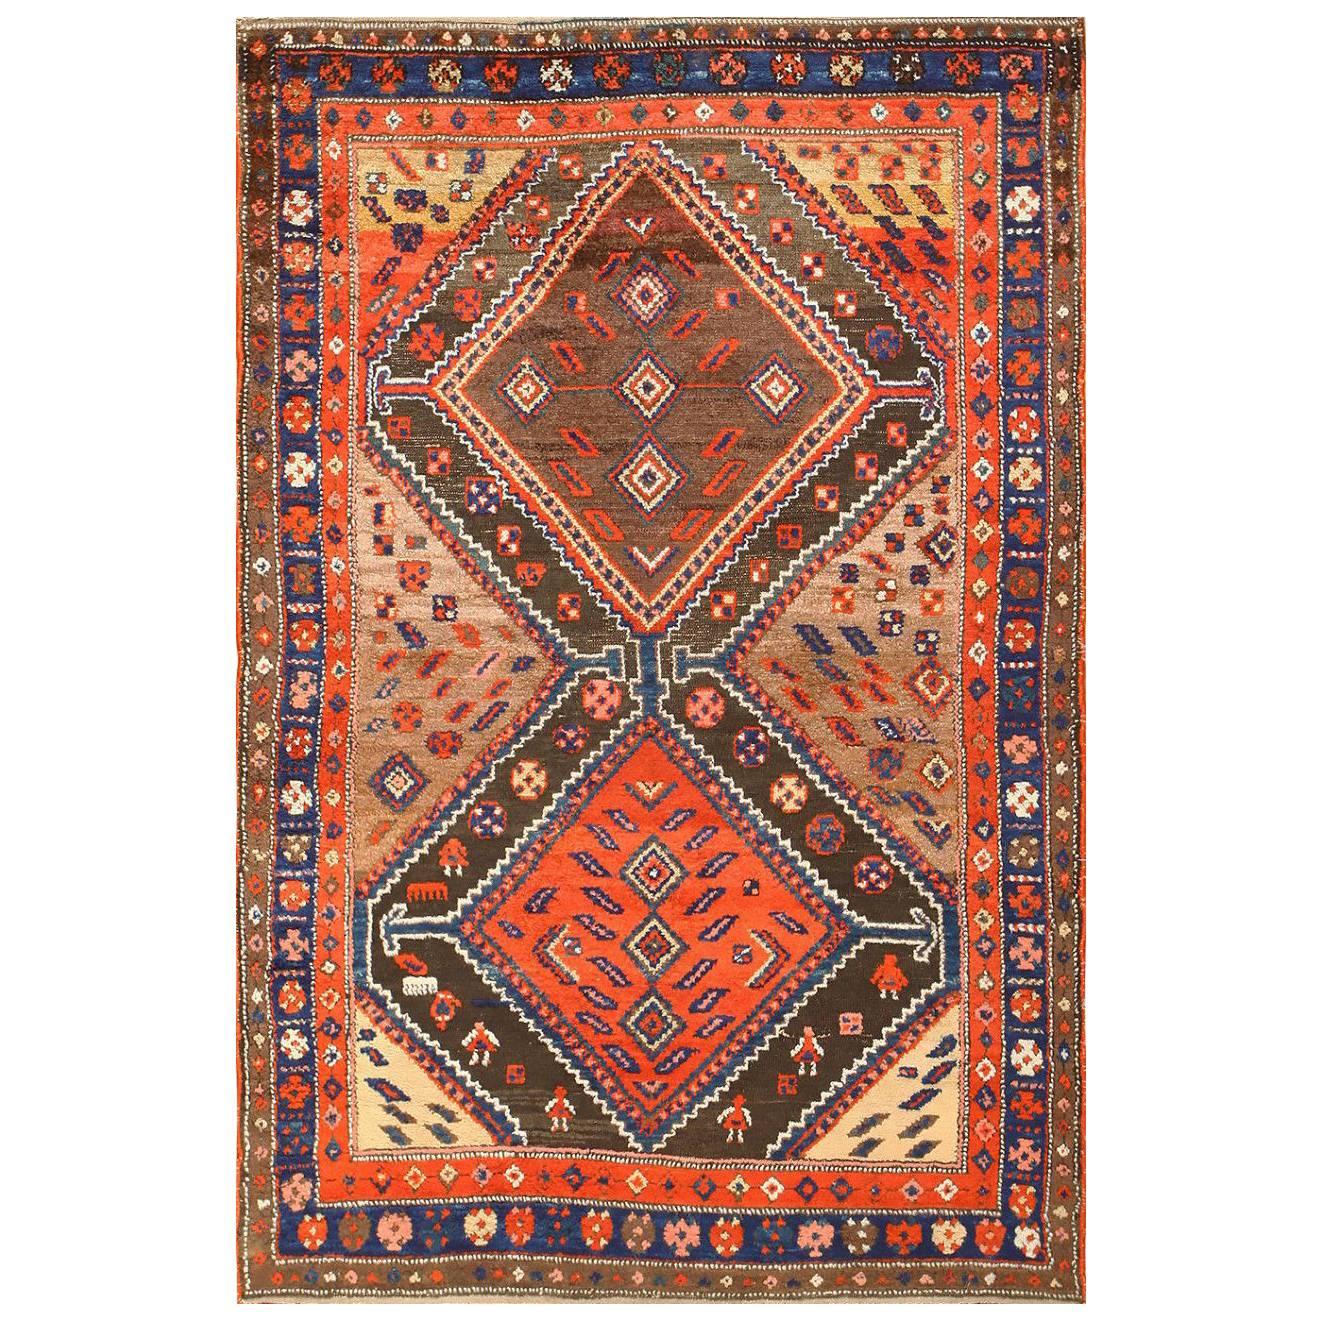 Beautiful Antique Persian Tribal Rug